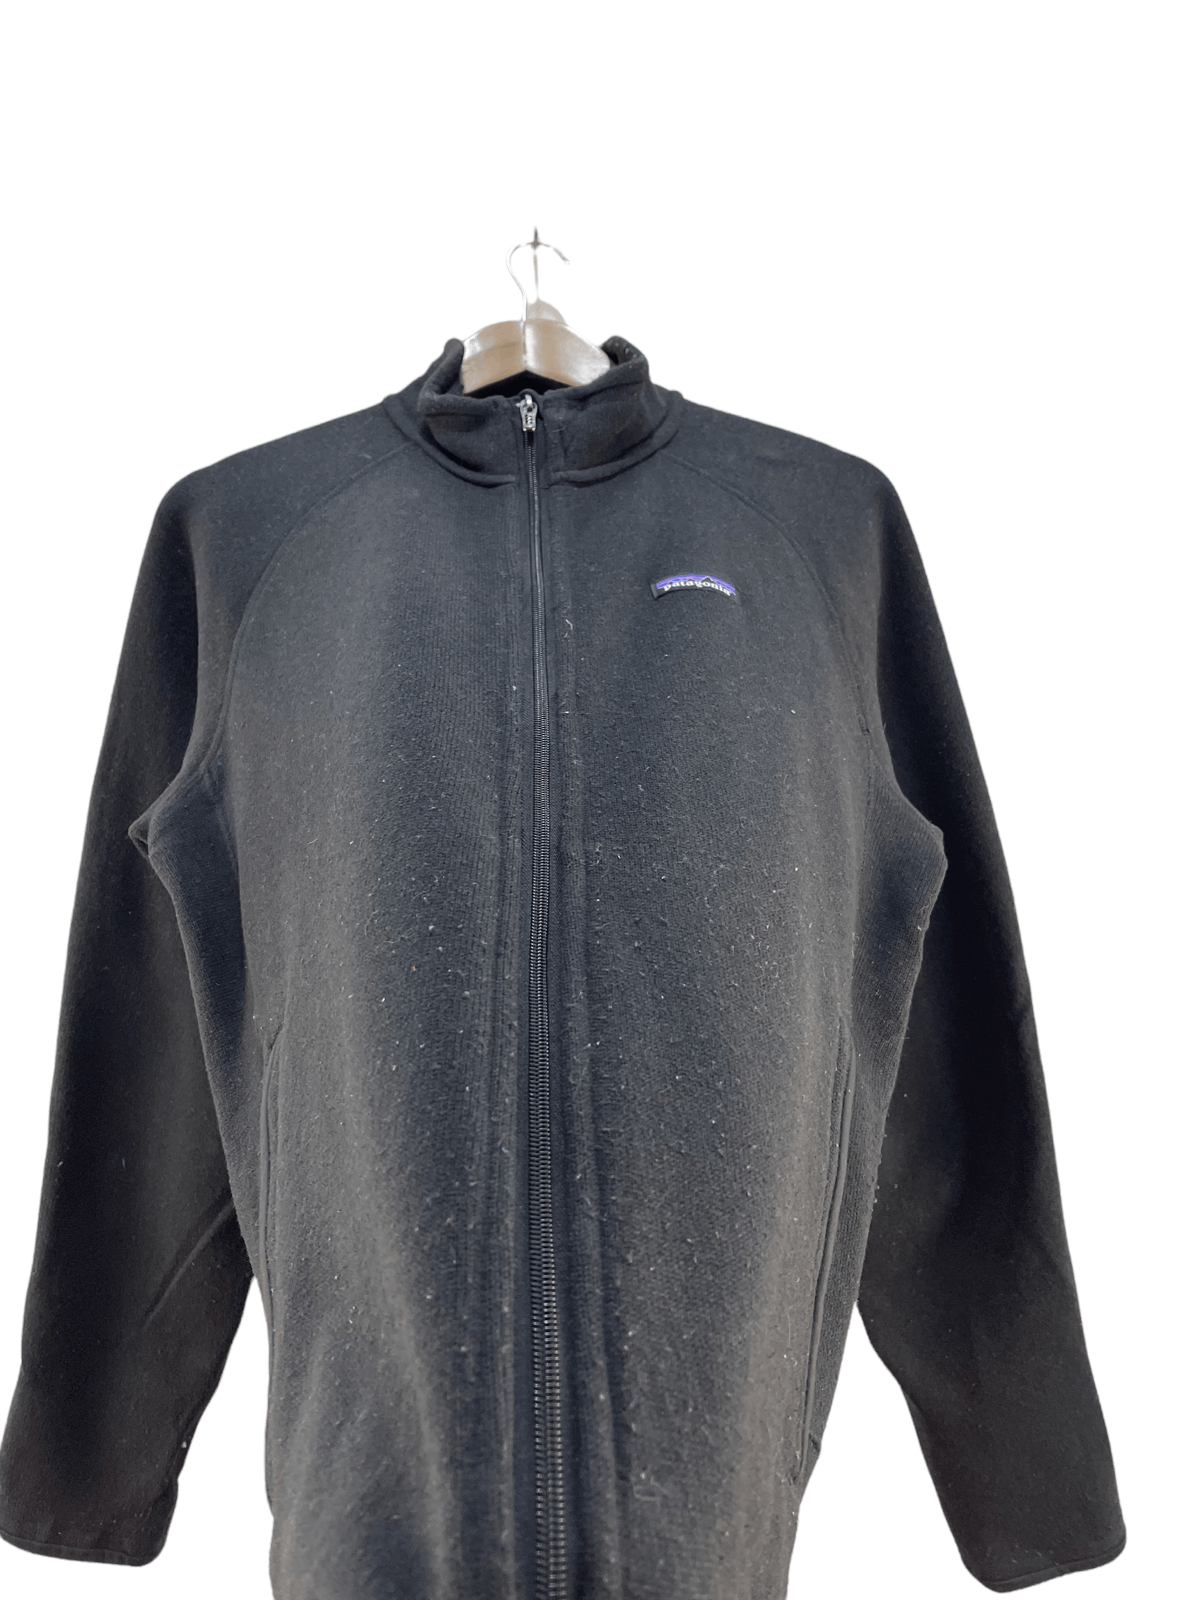 Patagonia Boa Fleece Jacket - 4